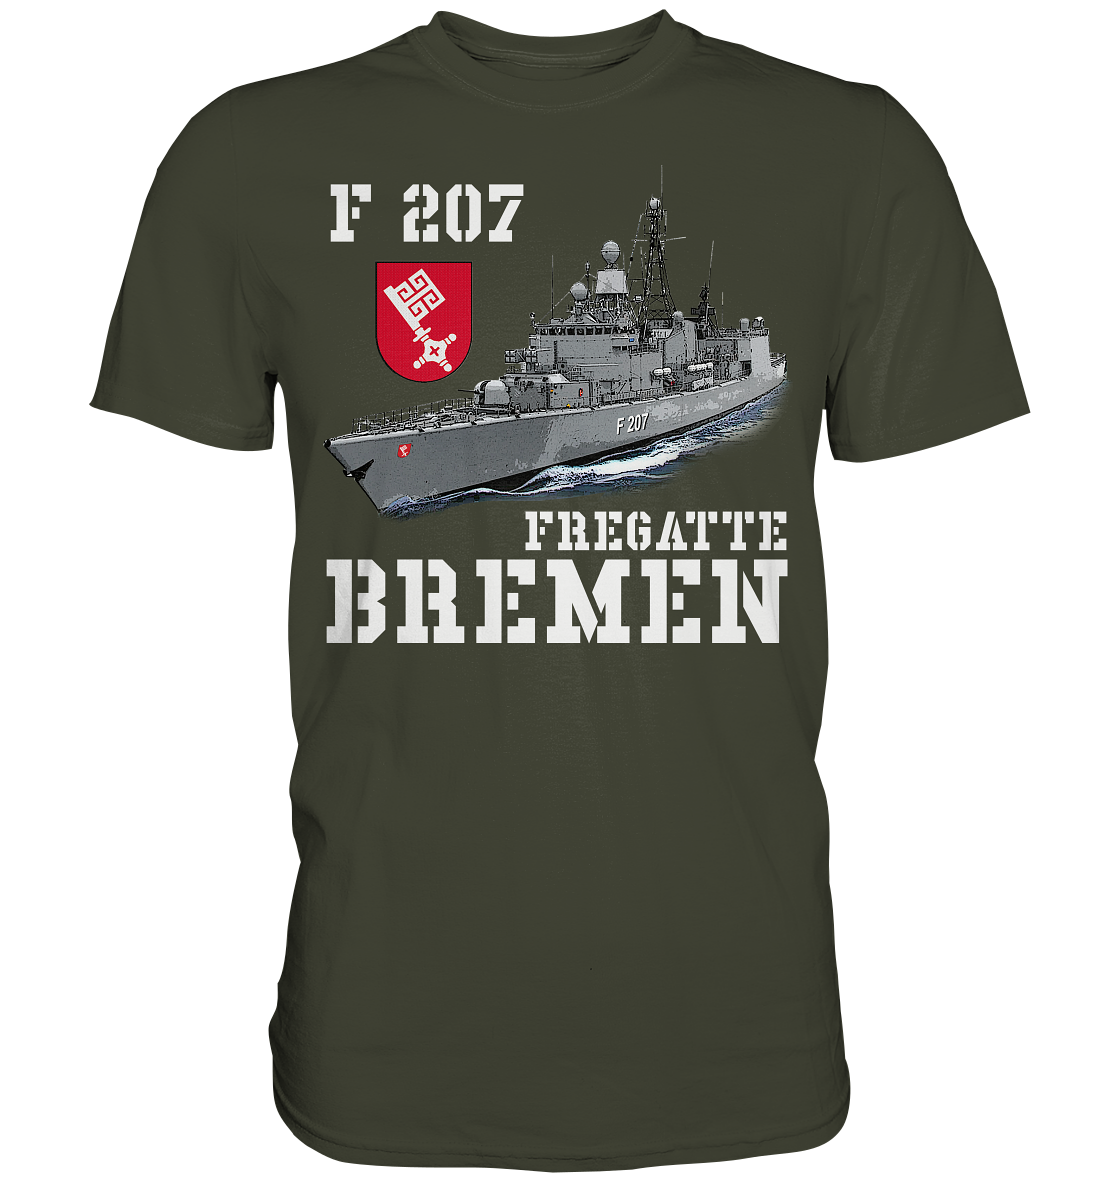 F207 Fregatte BREMEN - Premium Shirt